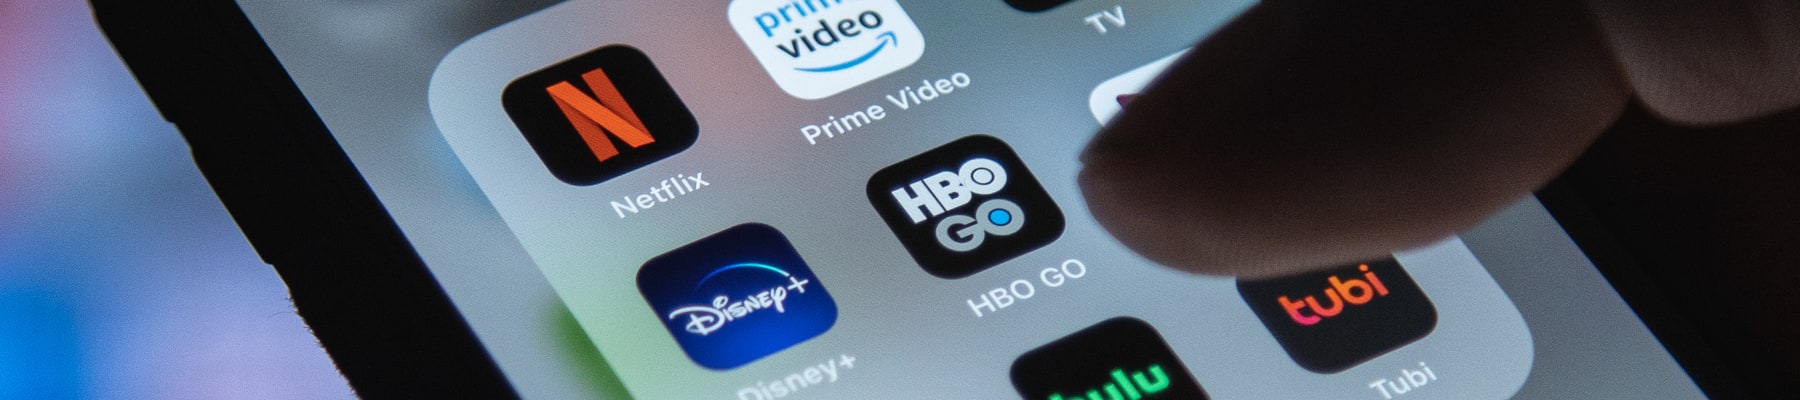 HBO GO mobile icon